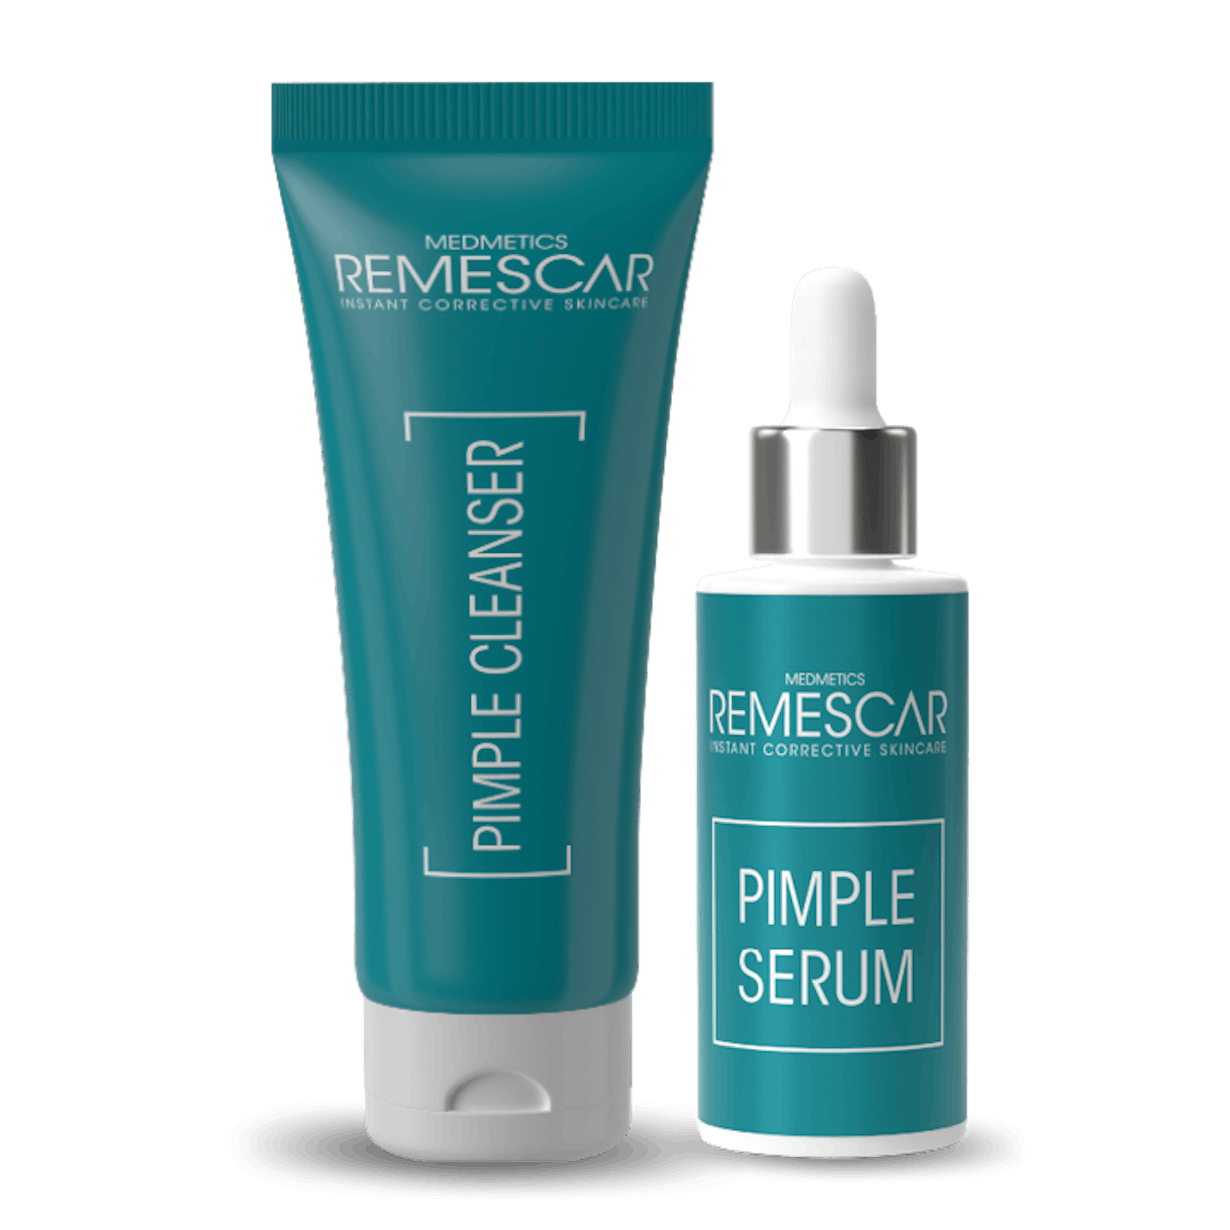 Remescar pdp pictures website and amazon 720x720px bundle pimple cleanser serum transparent